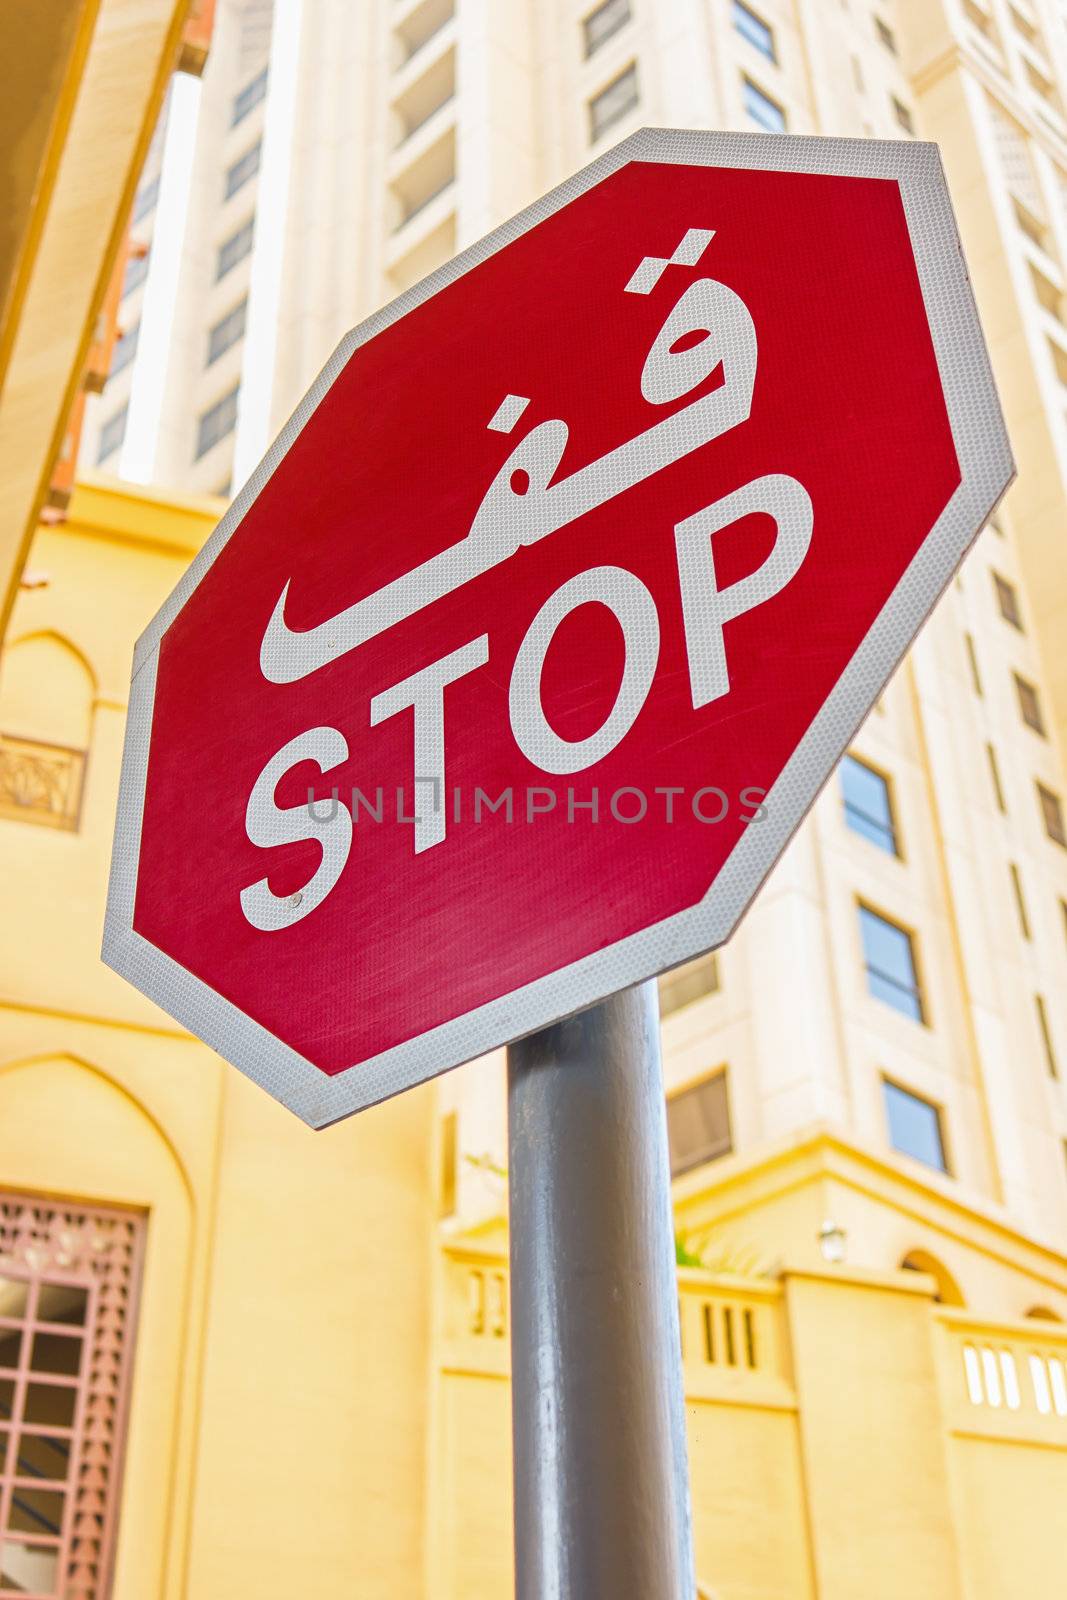 DUBAI, UAE - NOVEMBER 16: the sign "Stop"  in Dubai UAE nov 16 2012